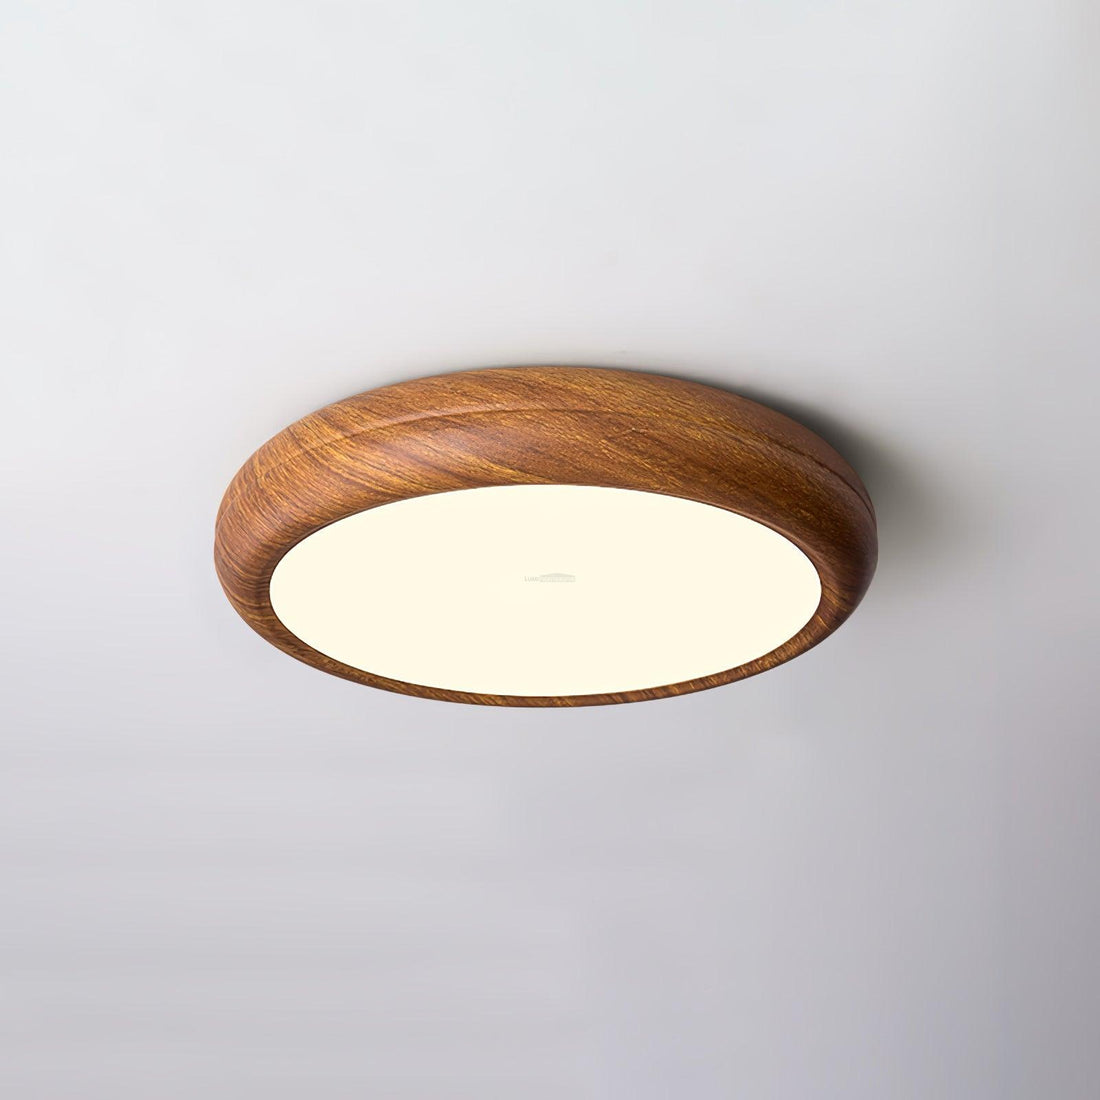 Wood Grain Round Type Ceiling Lamp